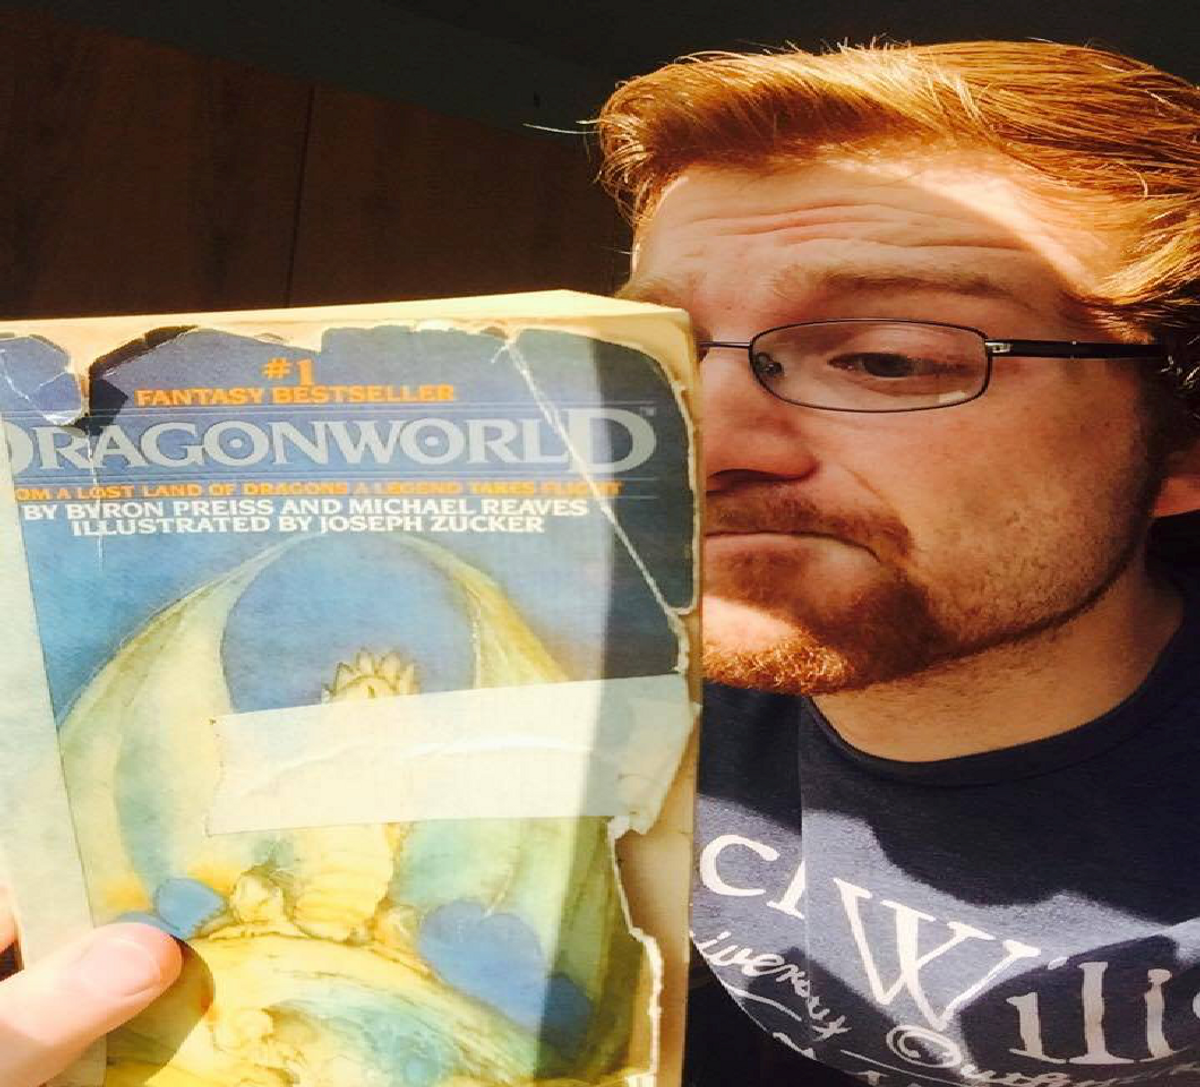 Book Review: "Dragonworld"